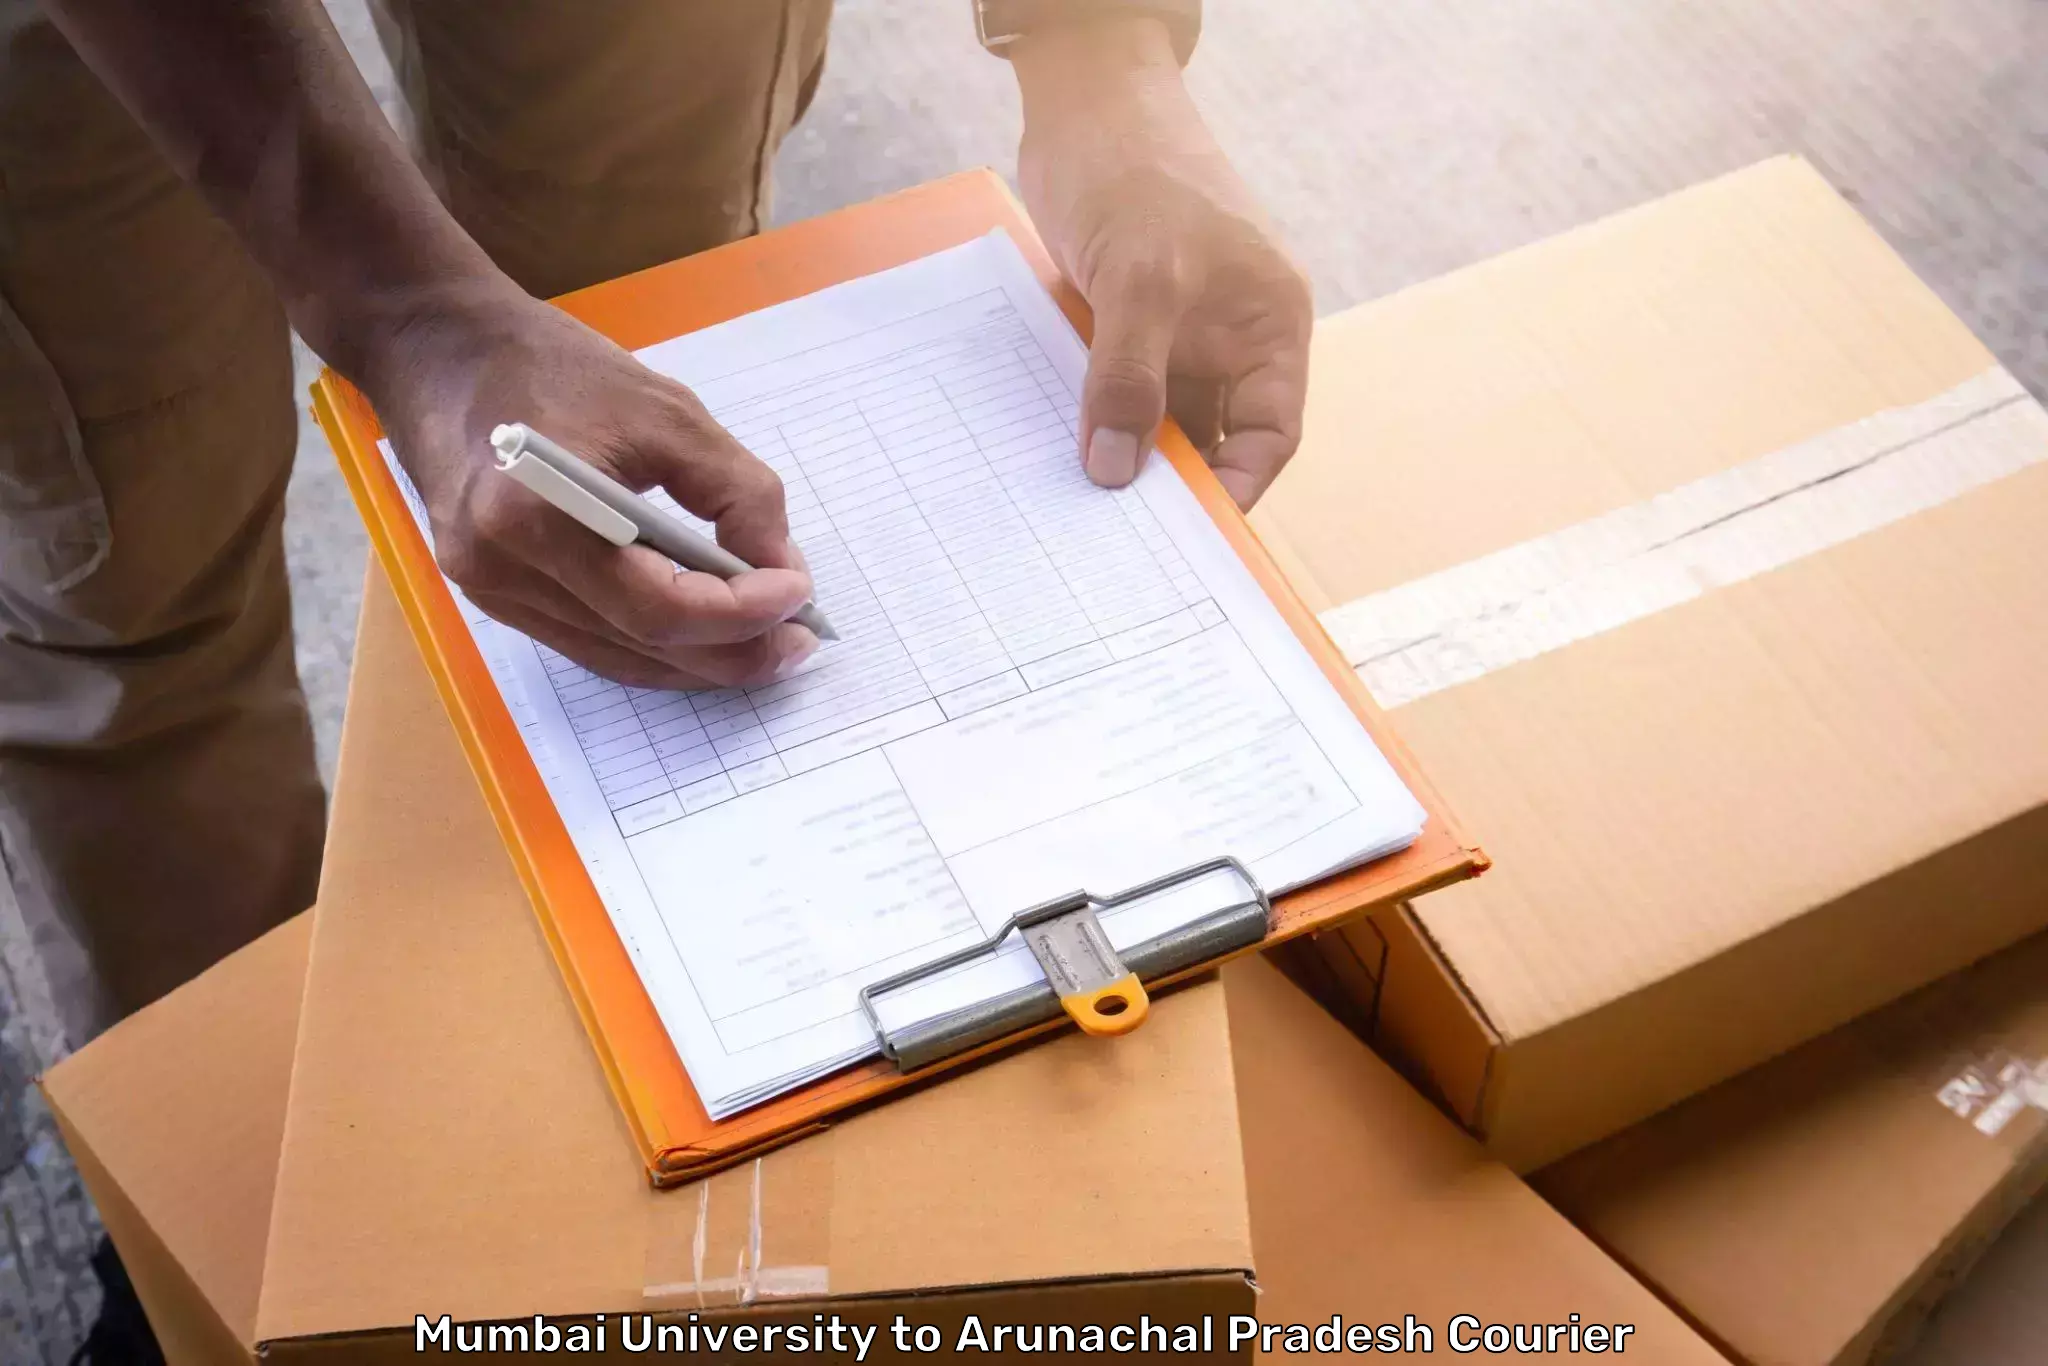 Luggage shipment tracking in Mumbai University to Tezu